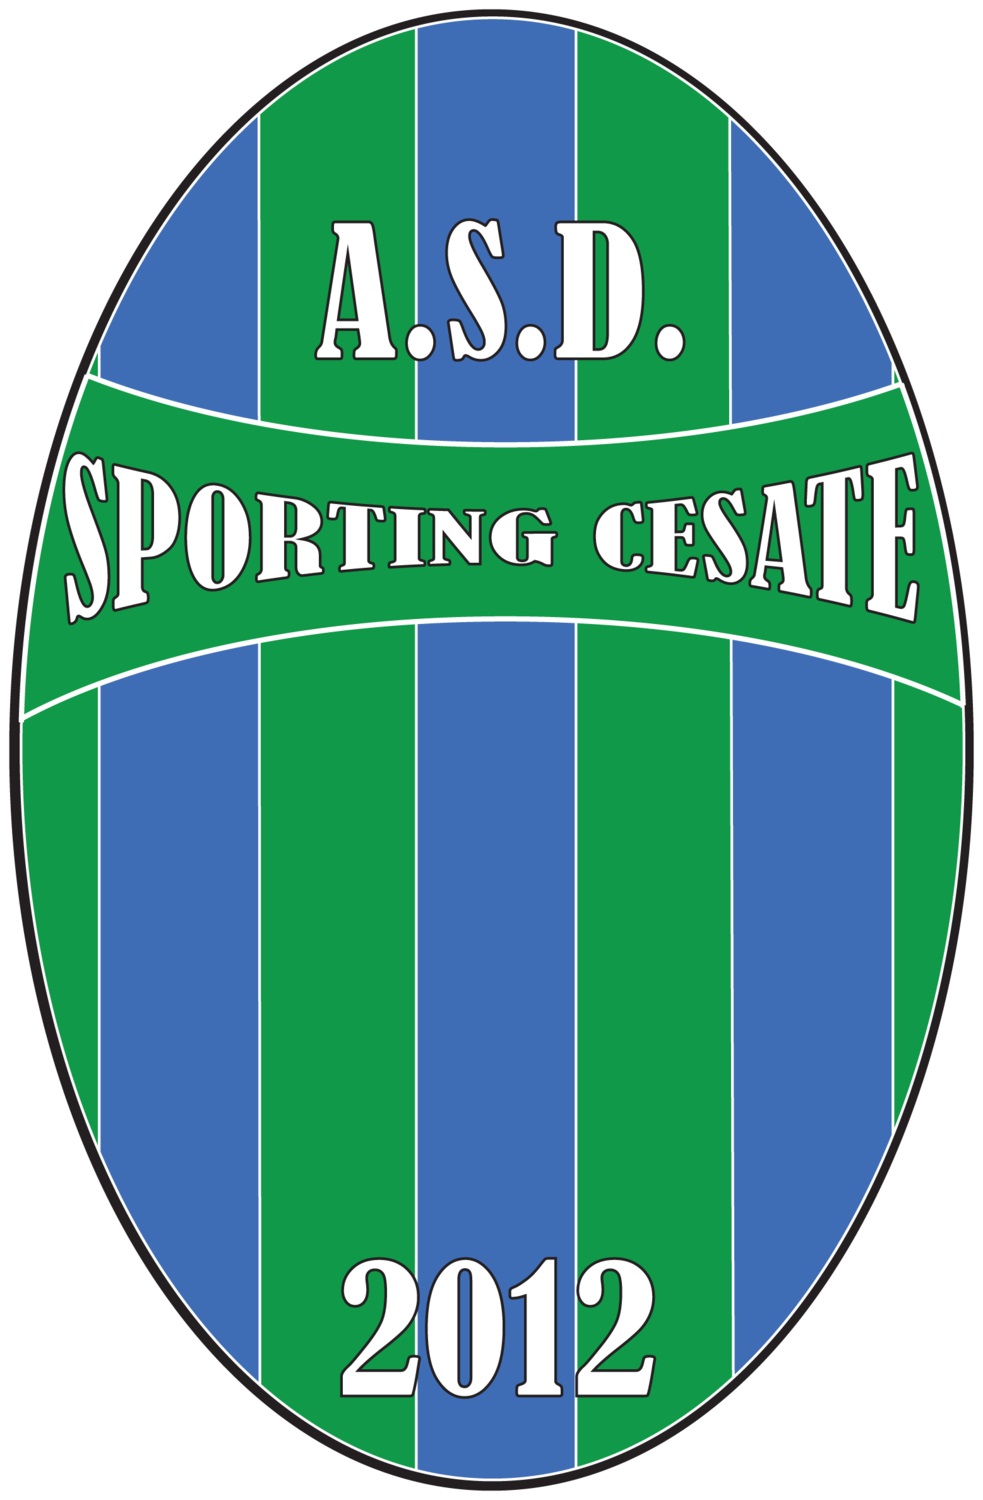 Wappen ASD Sporting Cesate 